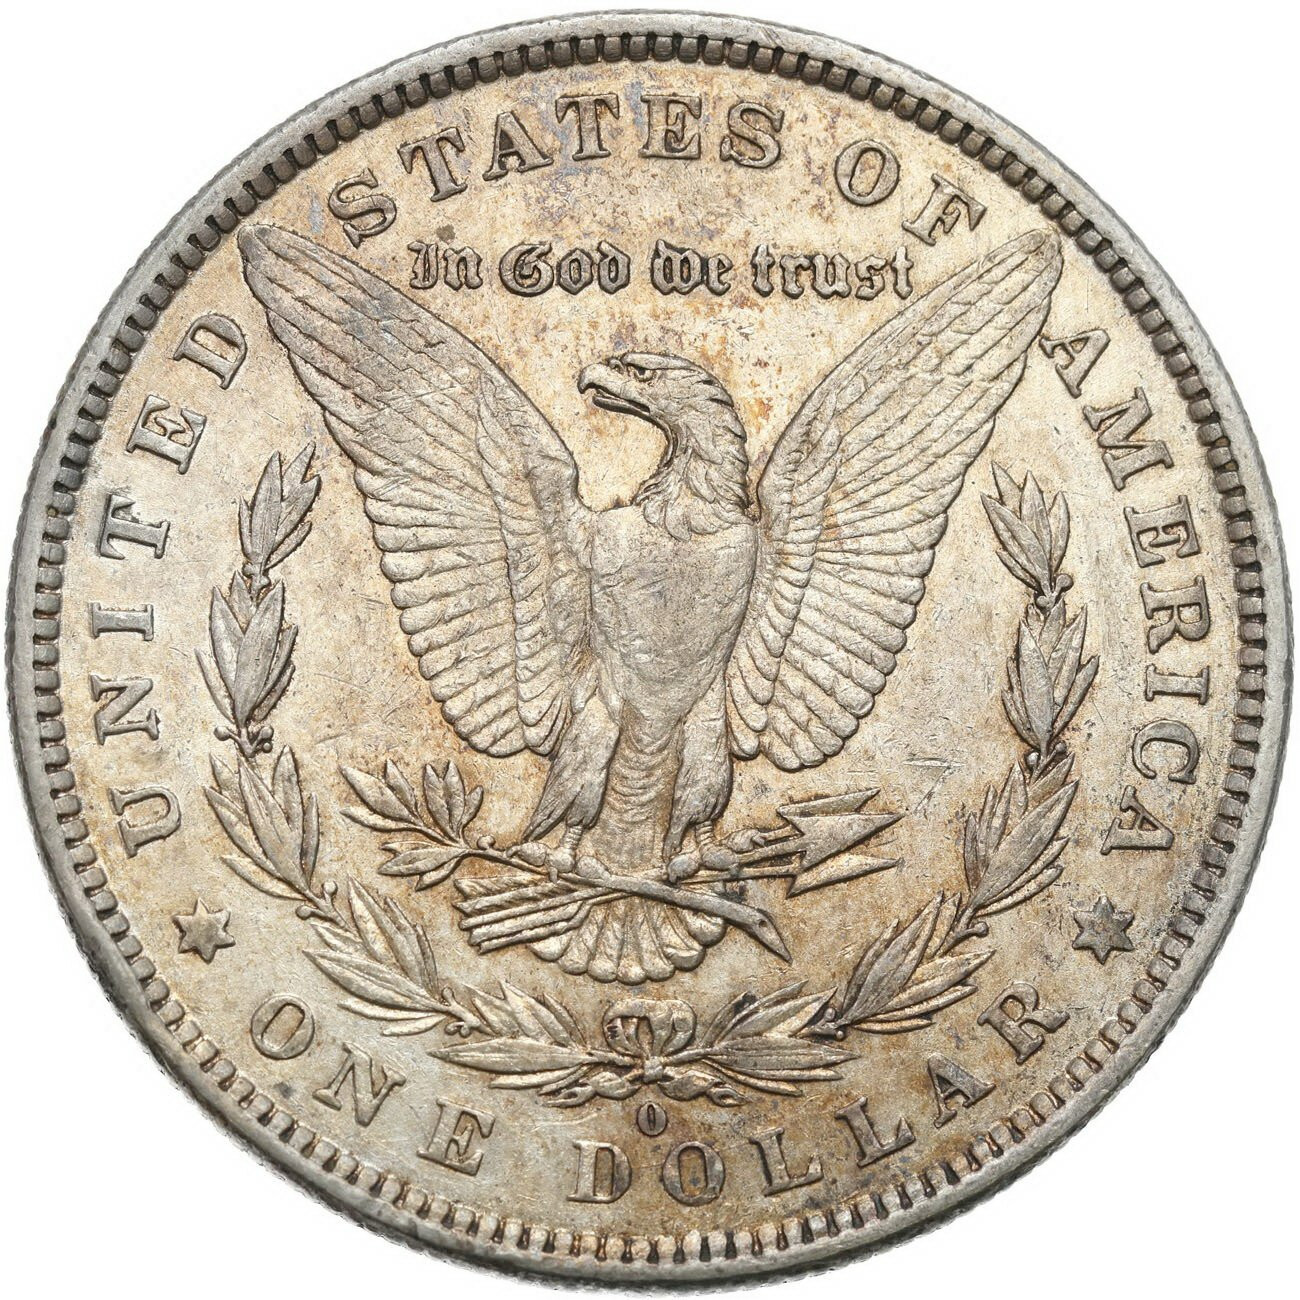 USA 1 dolar 1881 O, New Orleans 